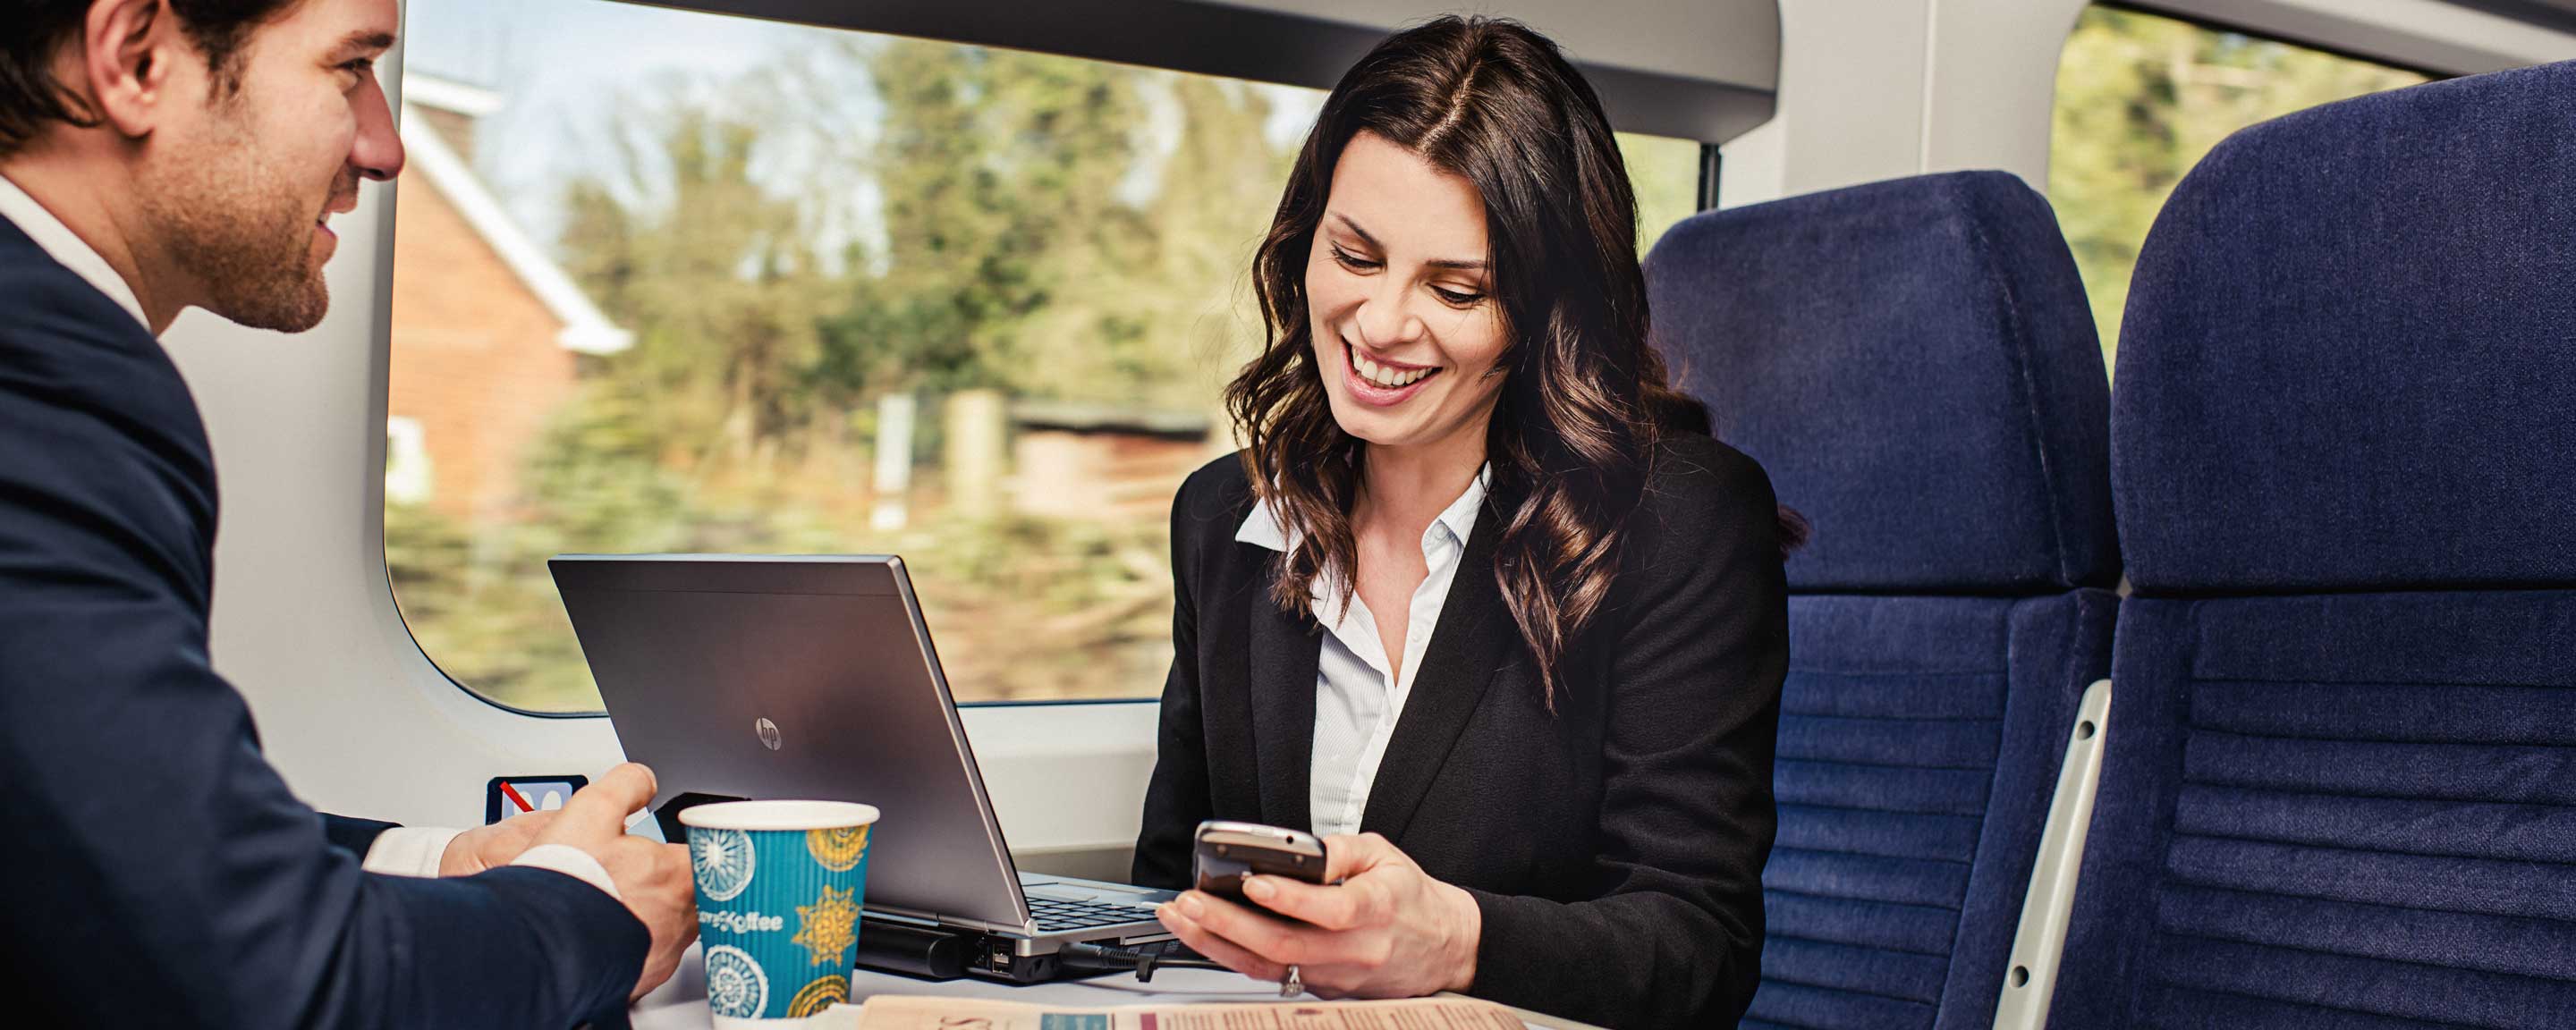 woman on train using laptop